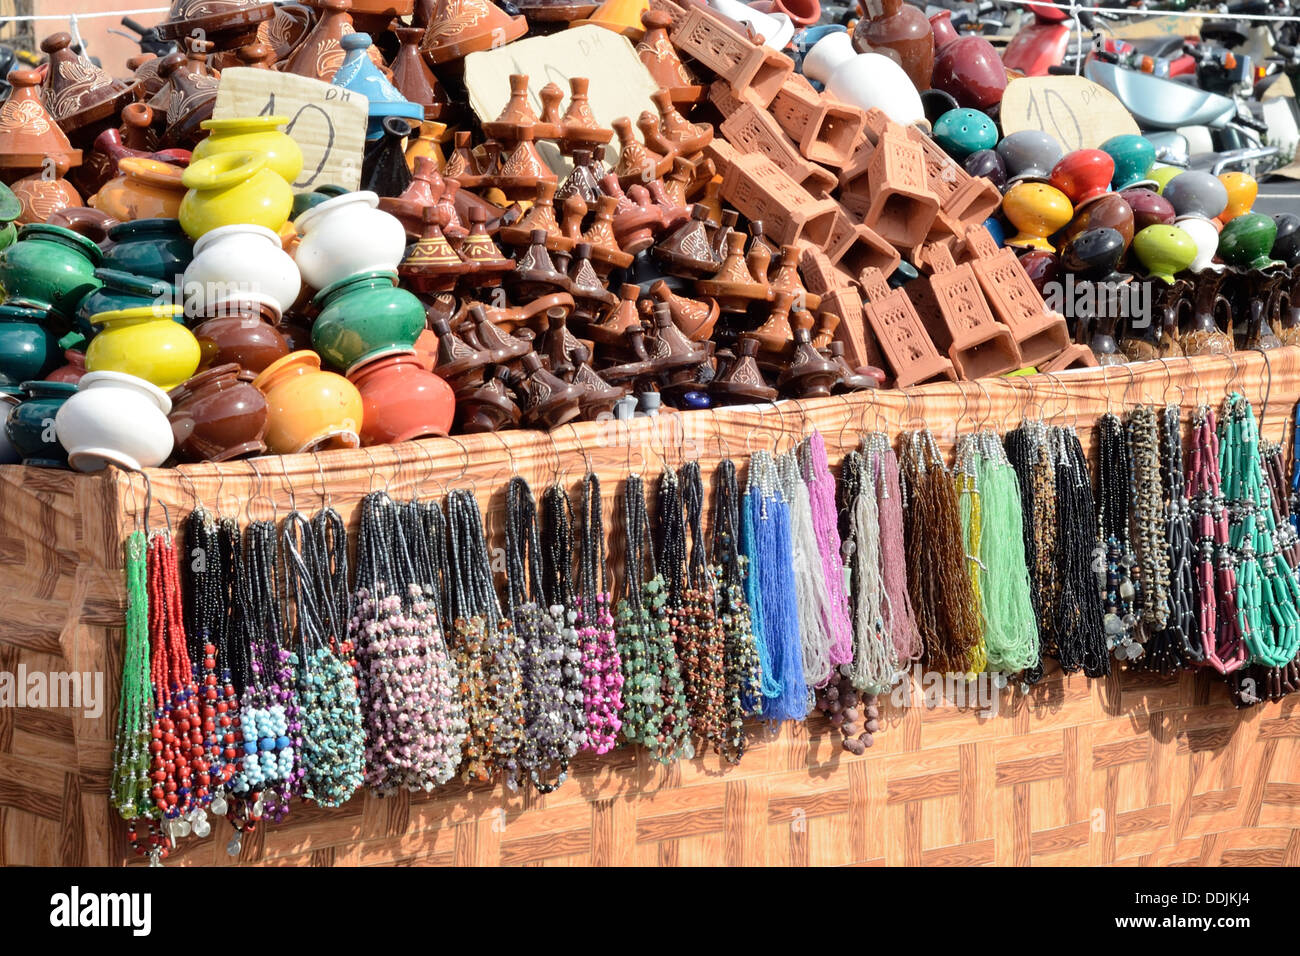 Souk Marktstand Marrakesch Marokko Afrika - verschiedene souvenirs Stockfoto